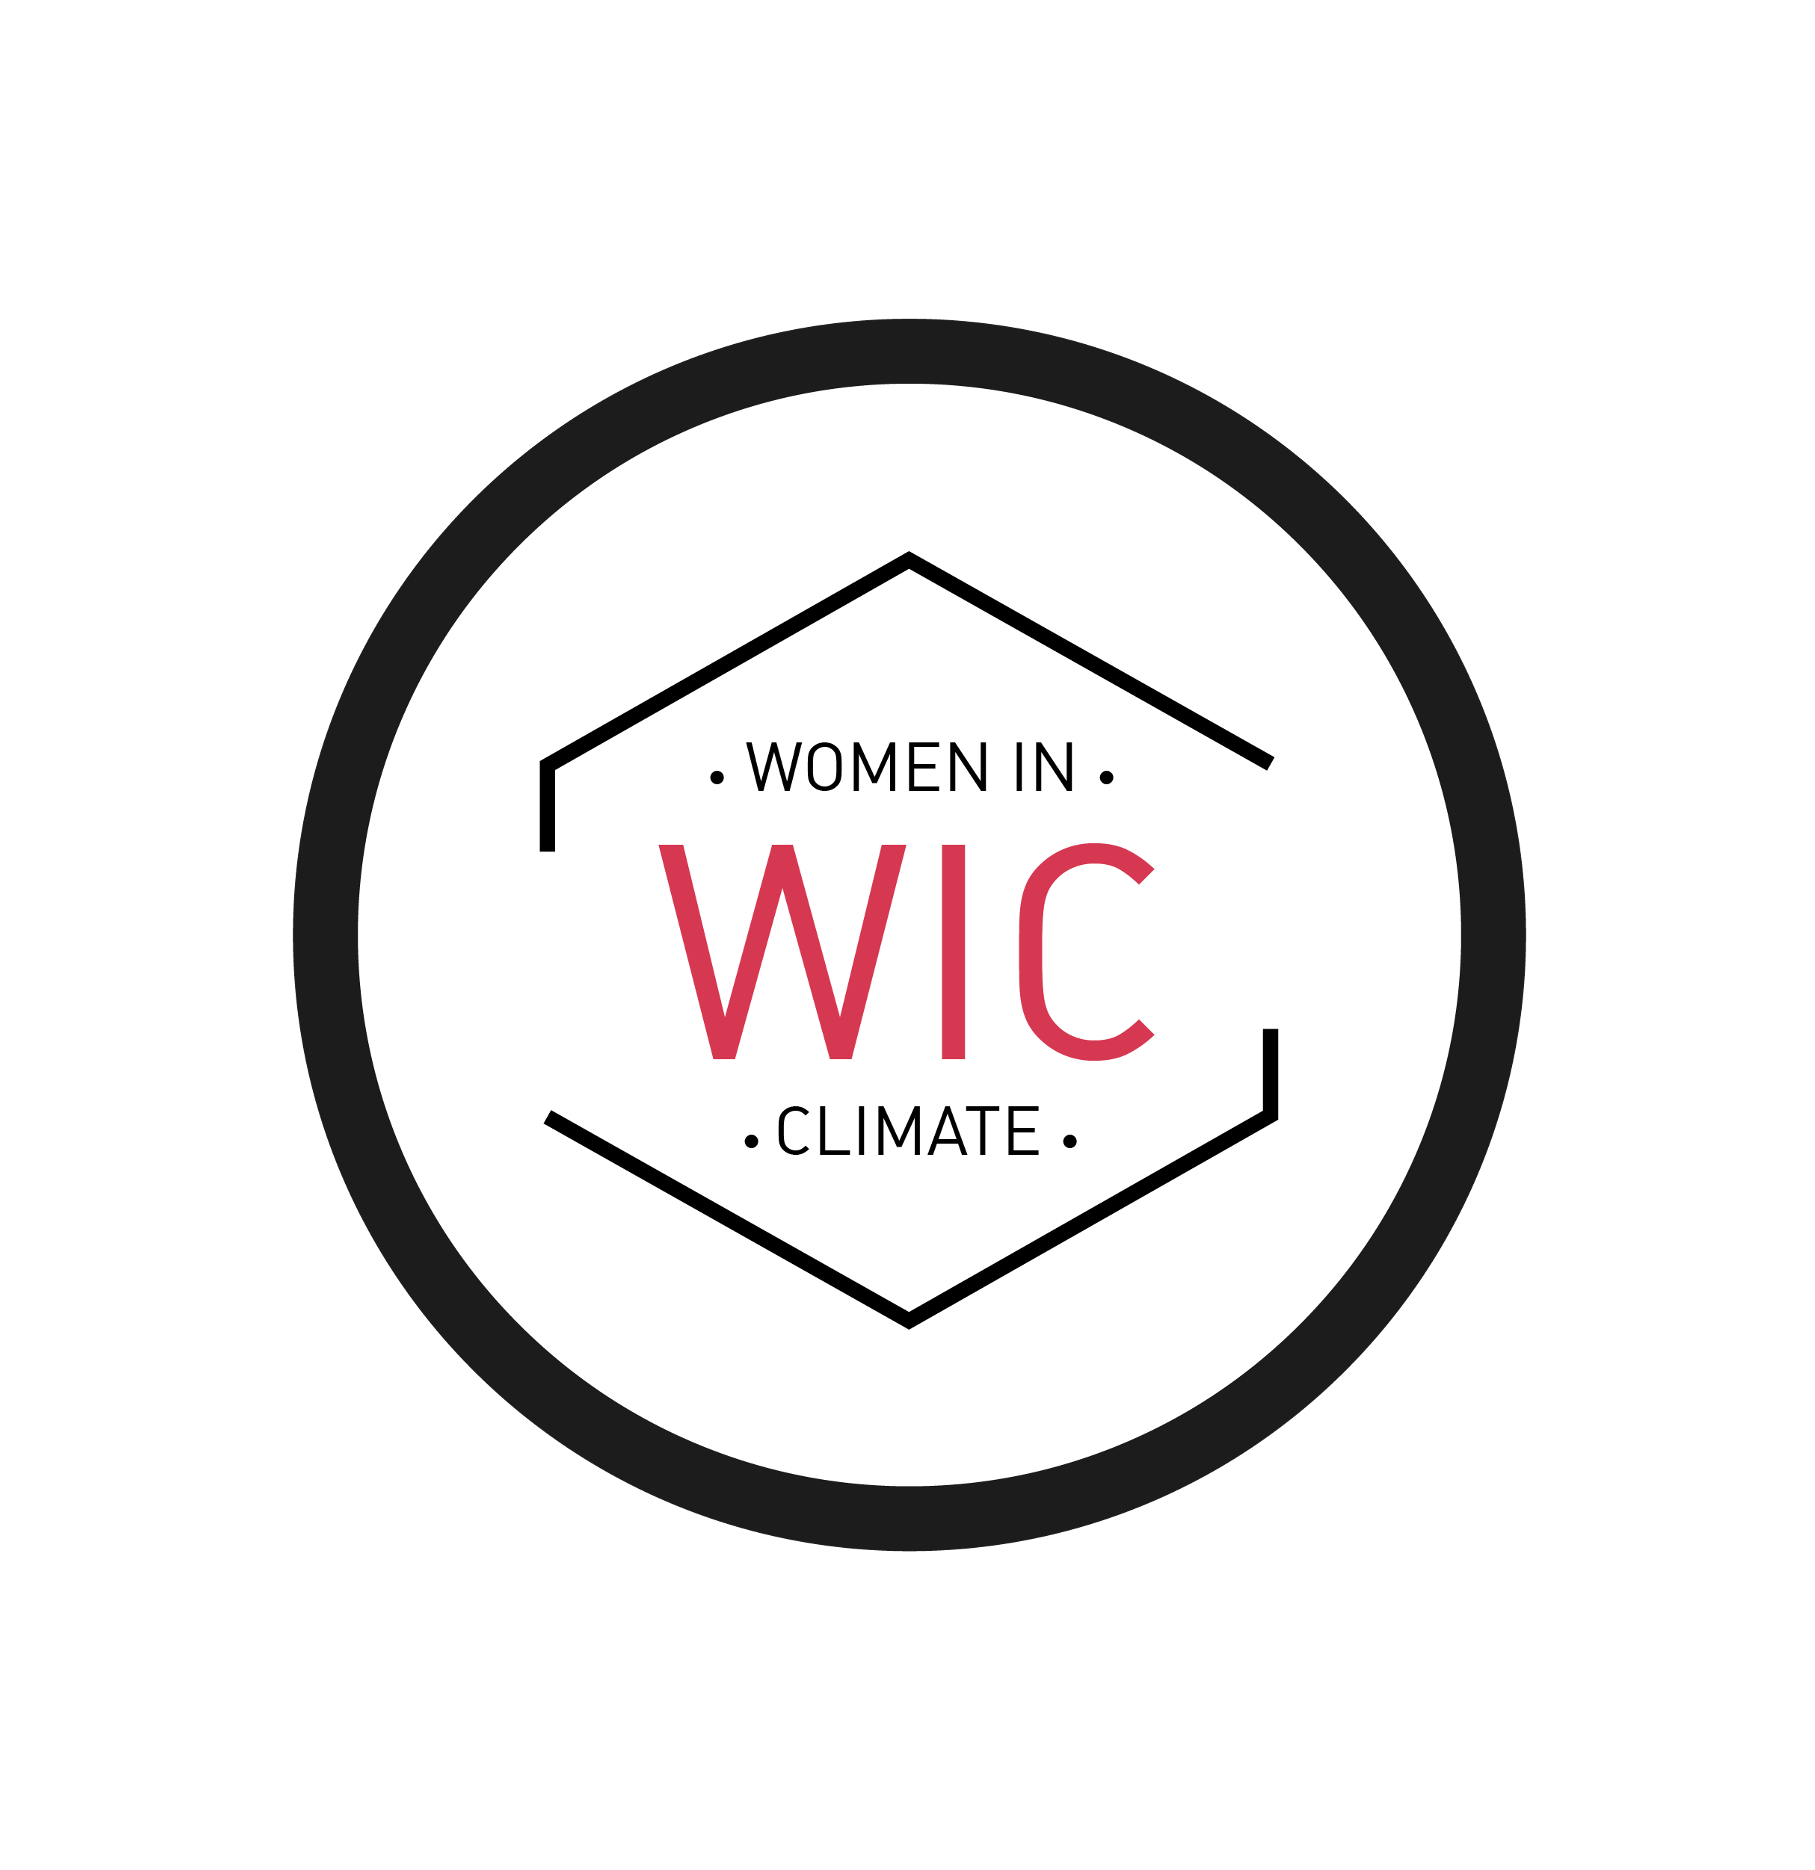 Met Office Jobs - Careers Website - Women In Climate Network Icon.png